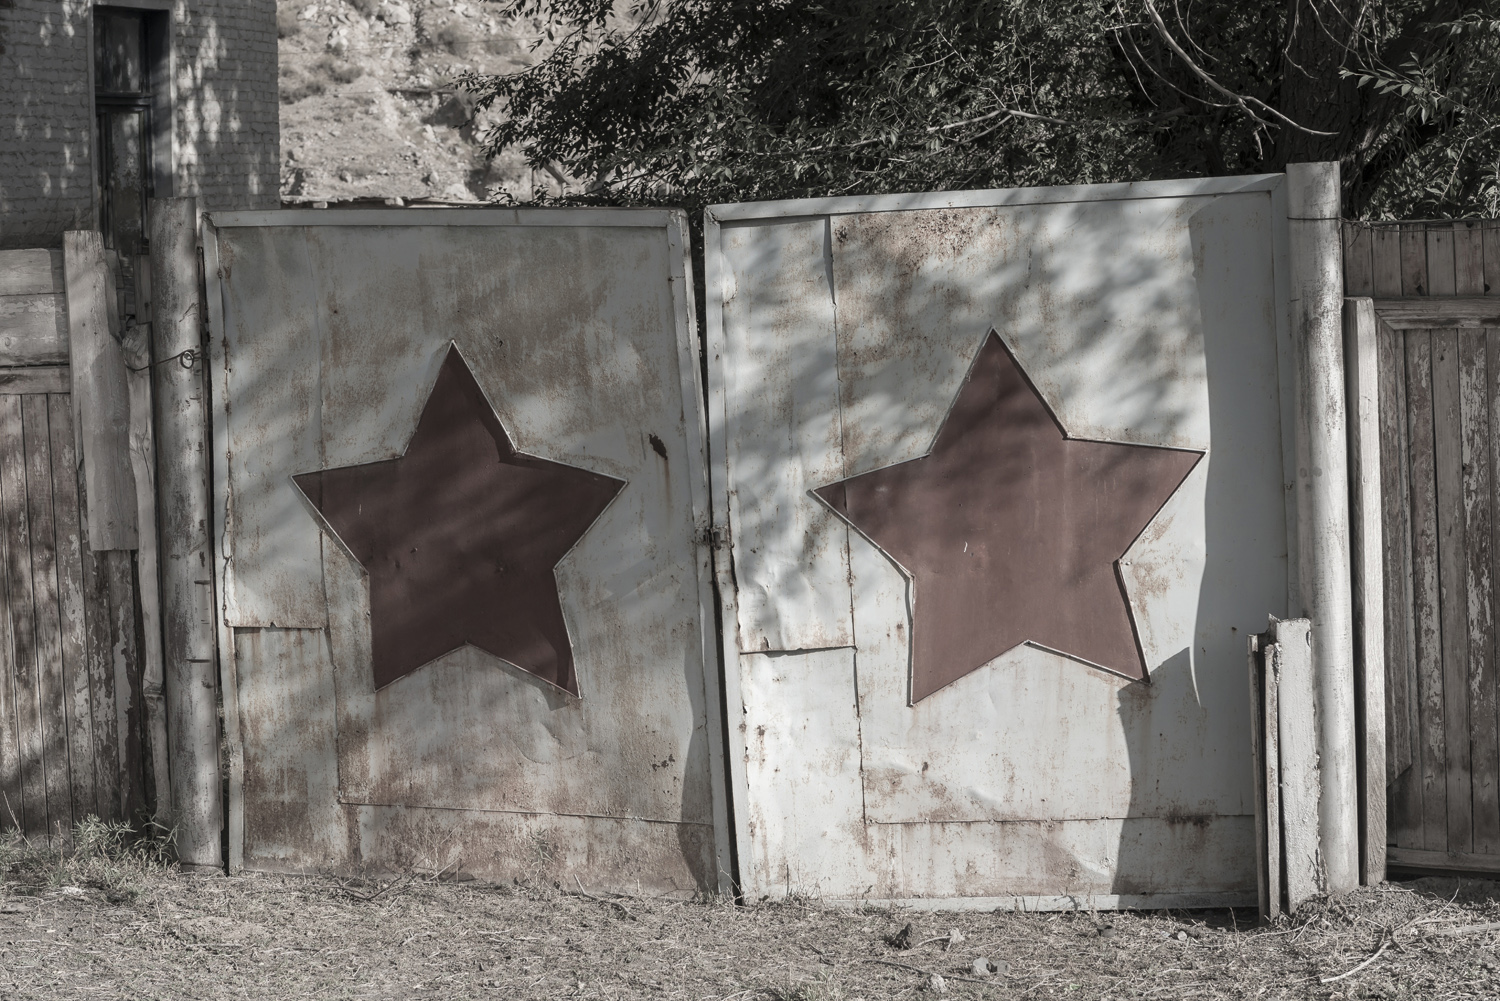 min-kush-soviet-uranium-mining-town-industrial-Russia-Kyrgyzstan-ruins-soviet-sign-jo-kearney-photos-video-photography-red-stars-gates.jpg